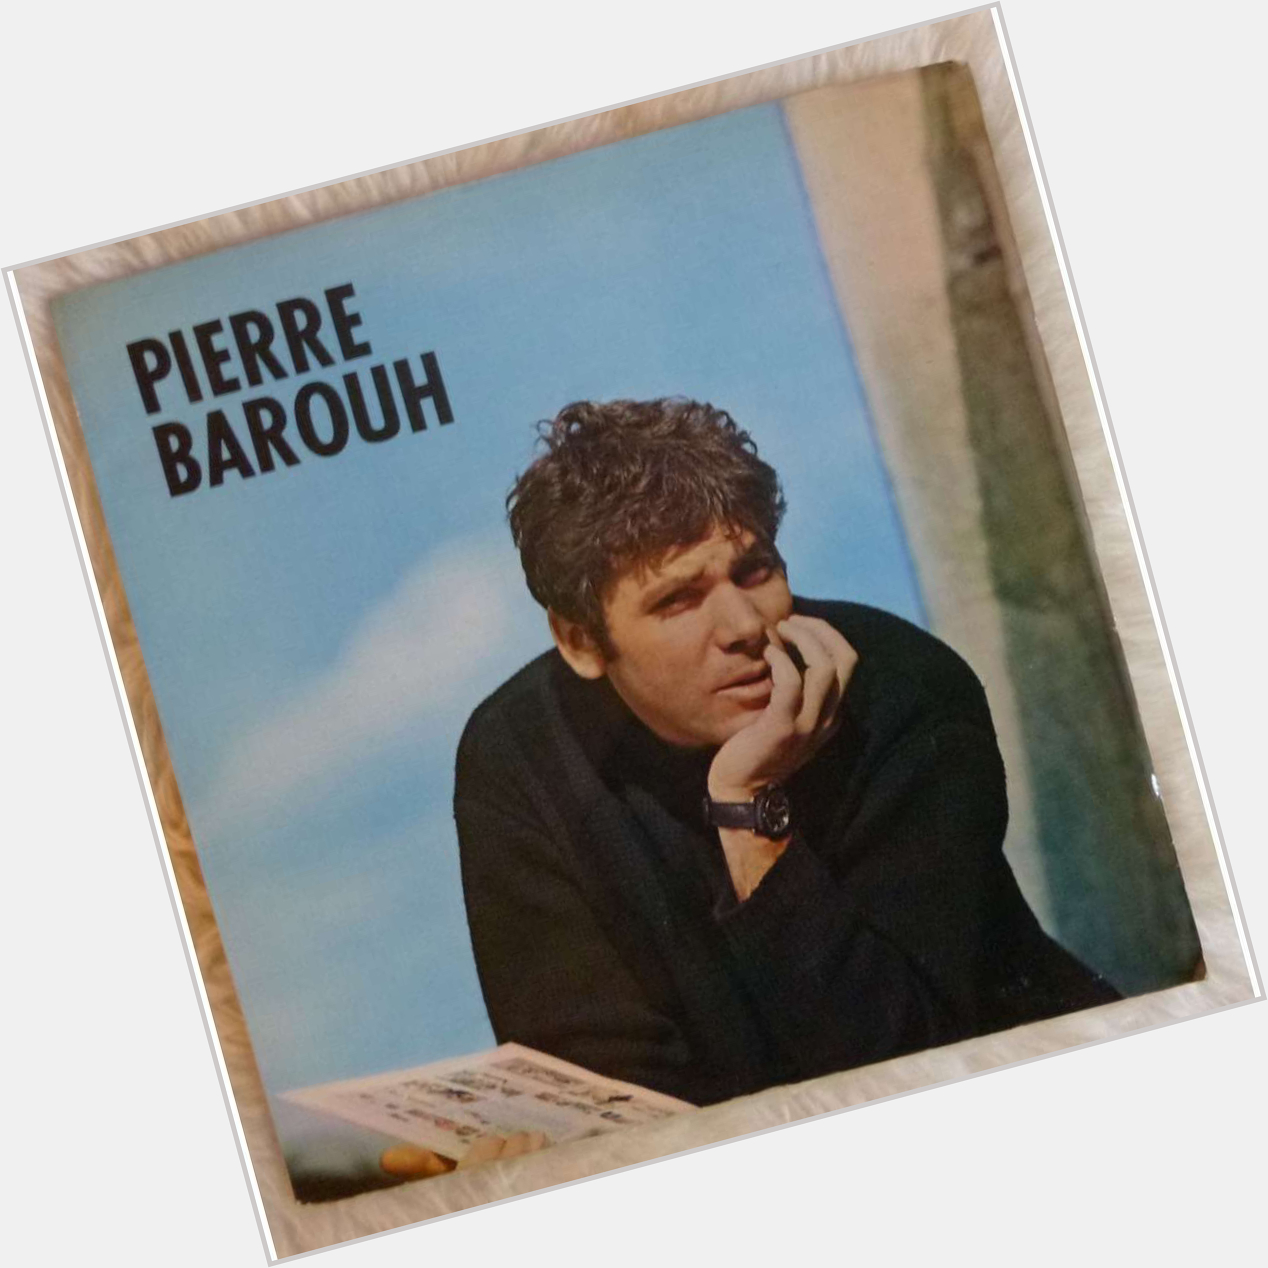 Pierre Barouh  